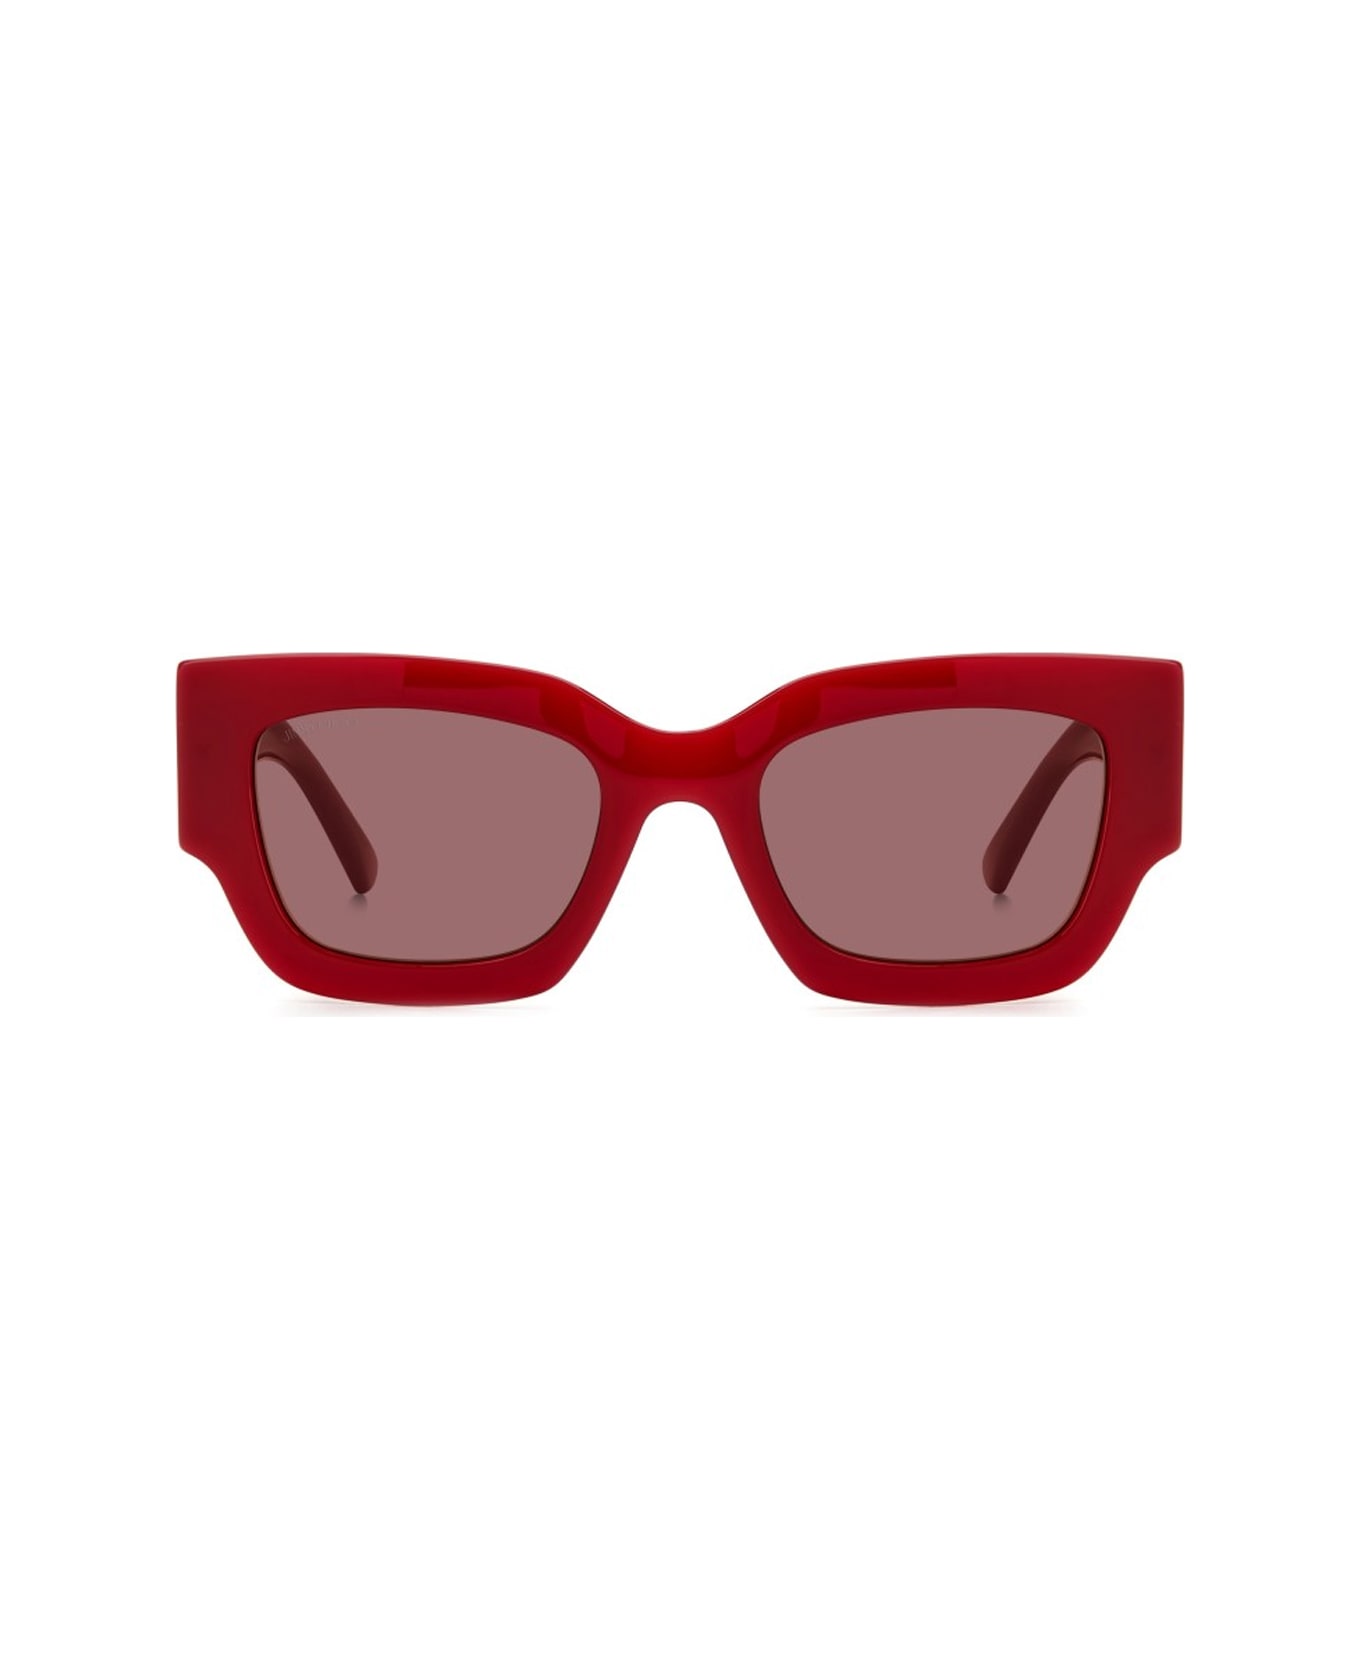 Jimmy Choo Eyewear Nena/s C9a/4s Sunglasses - Rosso